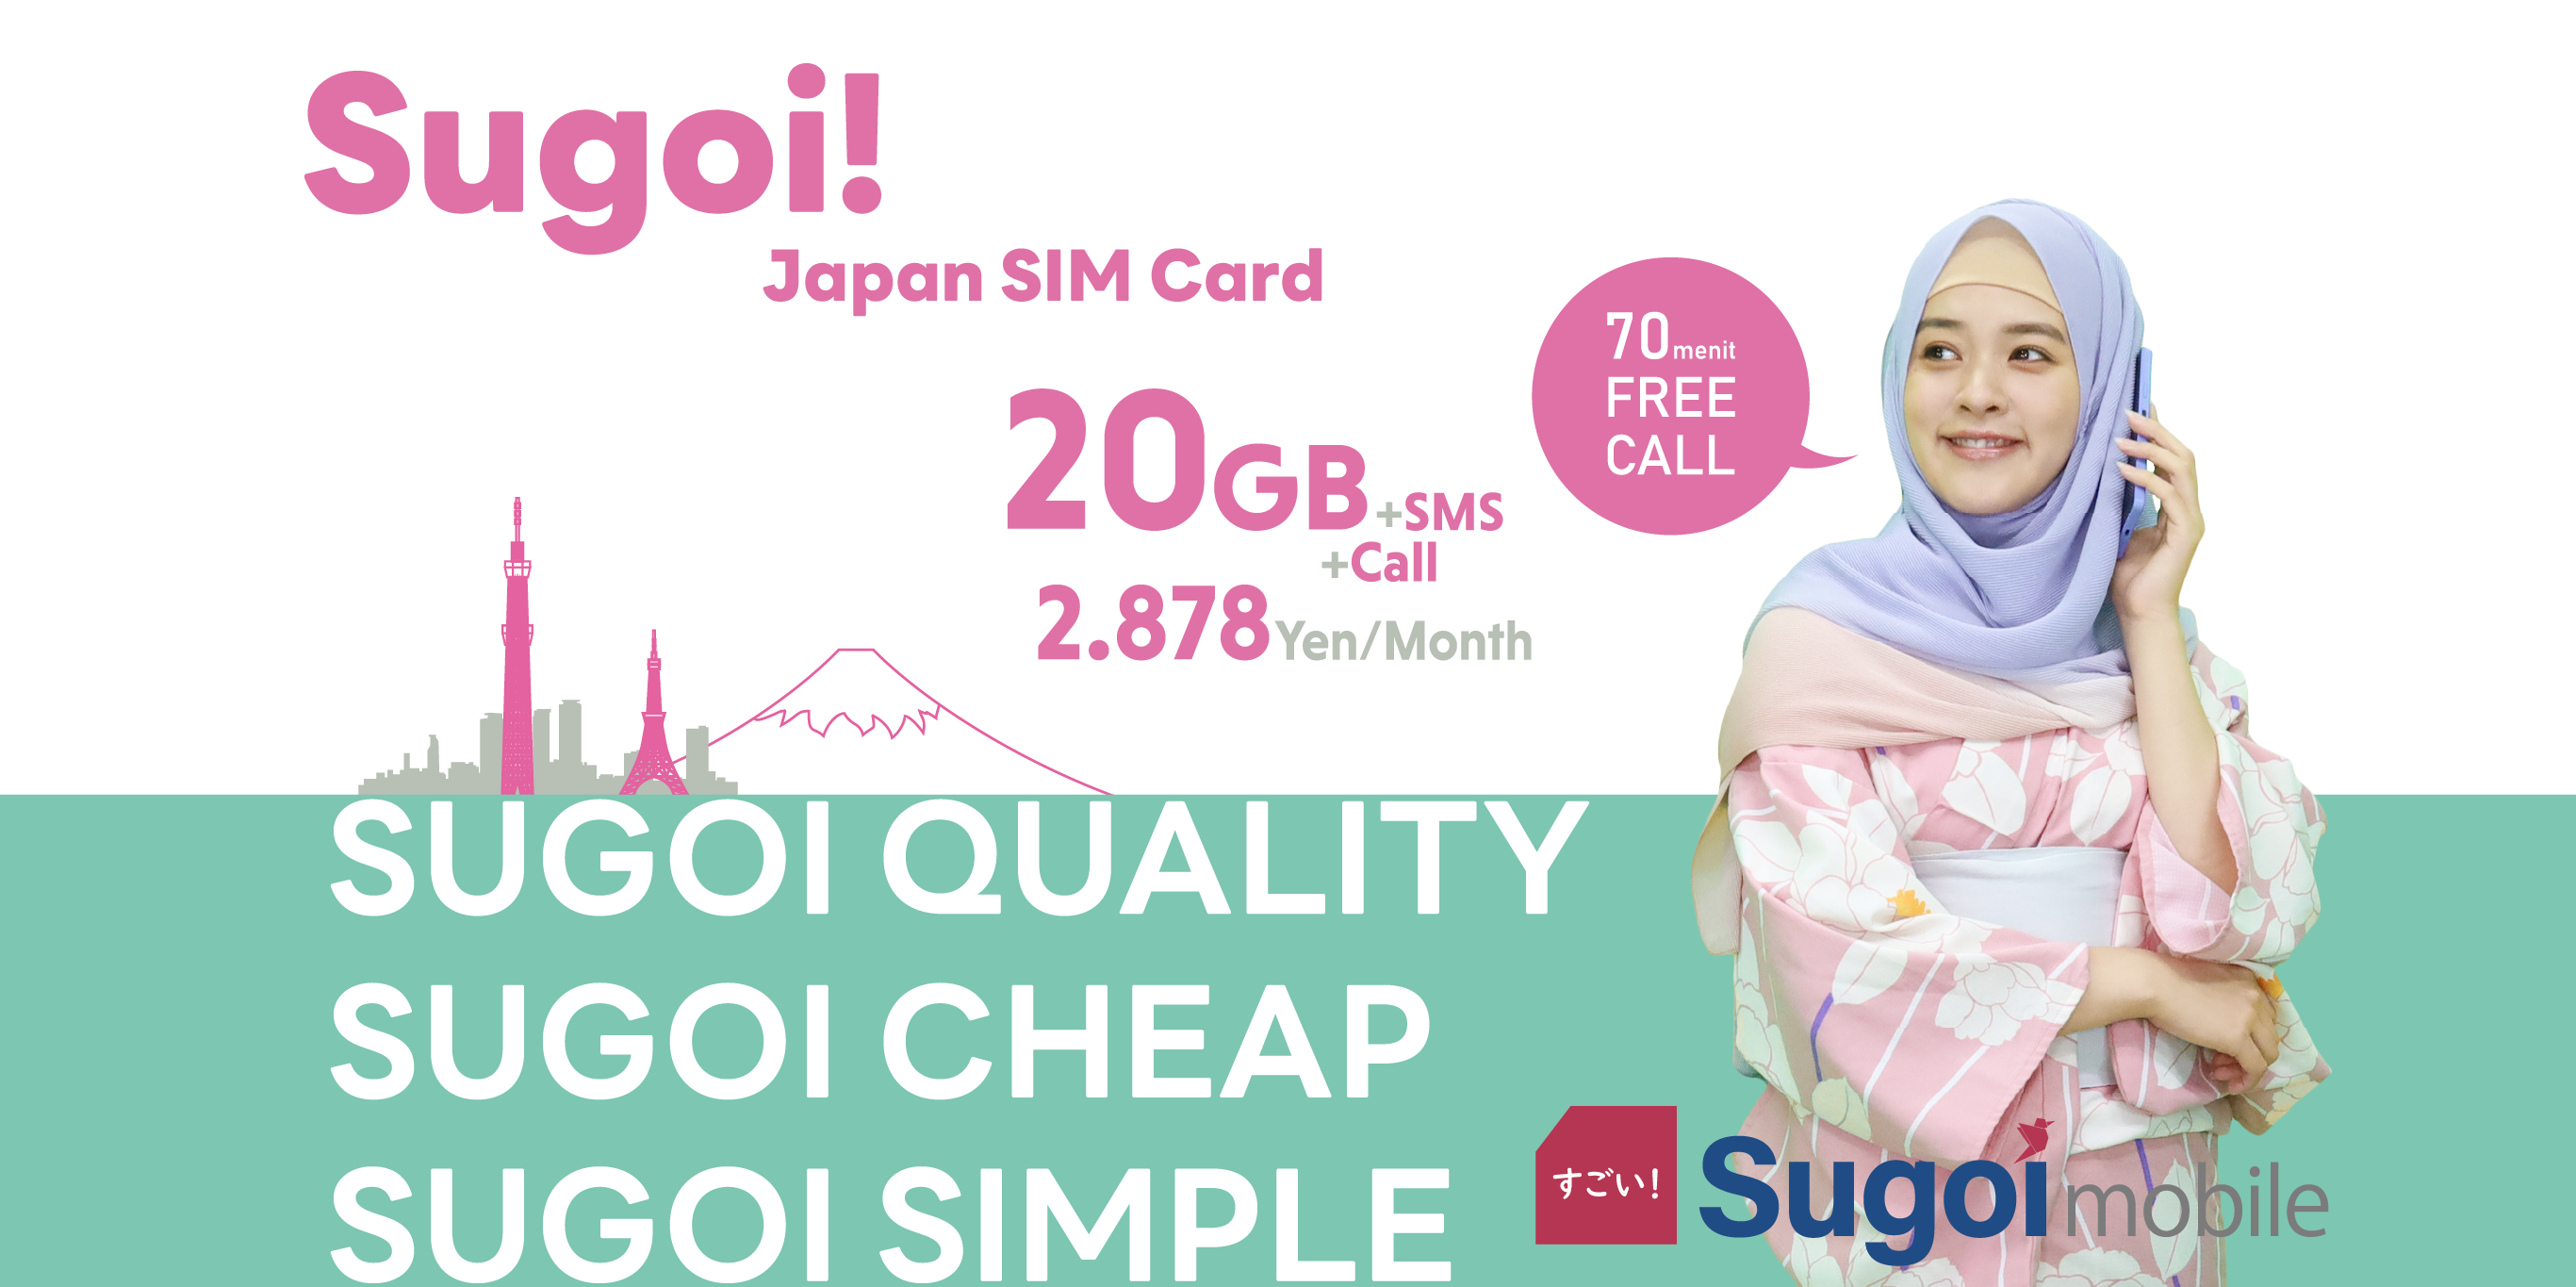 Sugoi Japan SIM Card